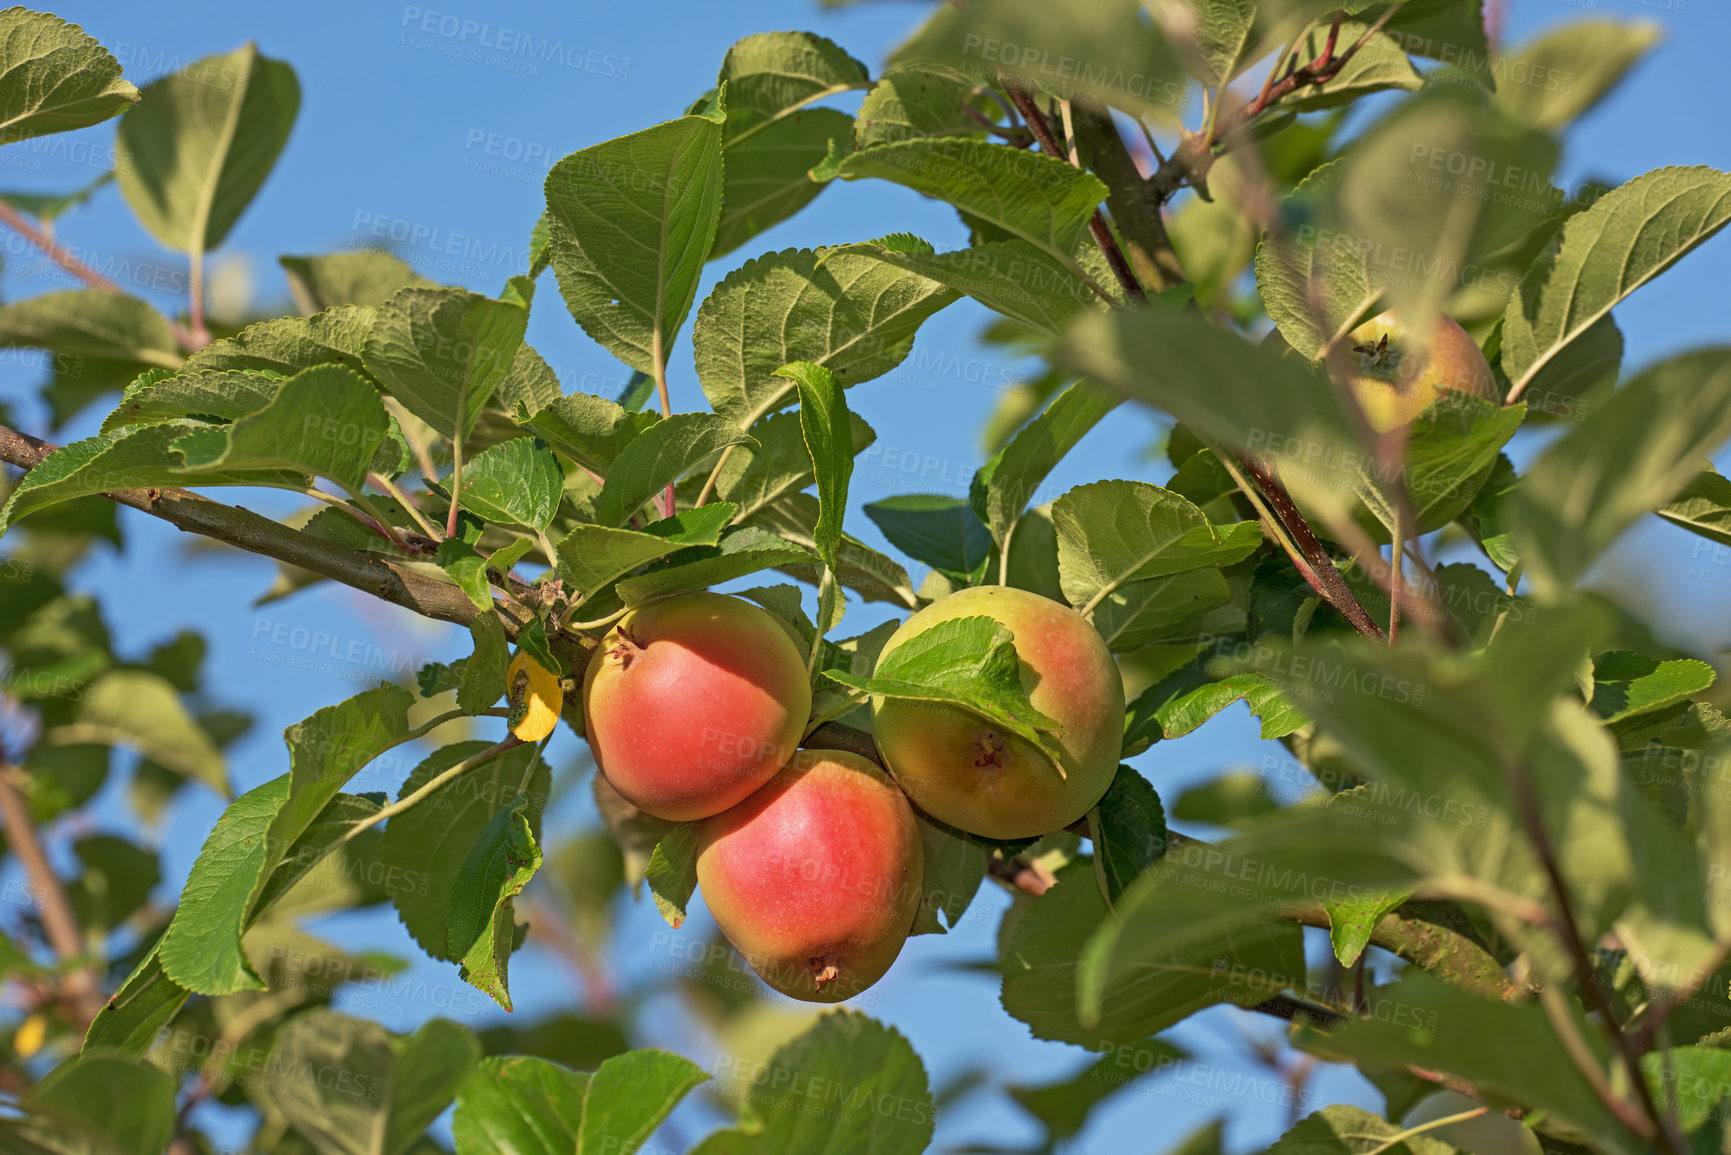 Buy stock photo Fresh apple in the tree